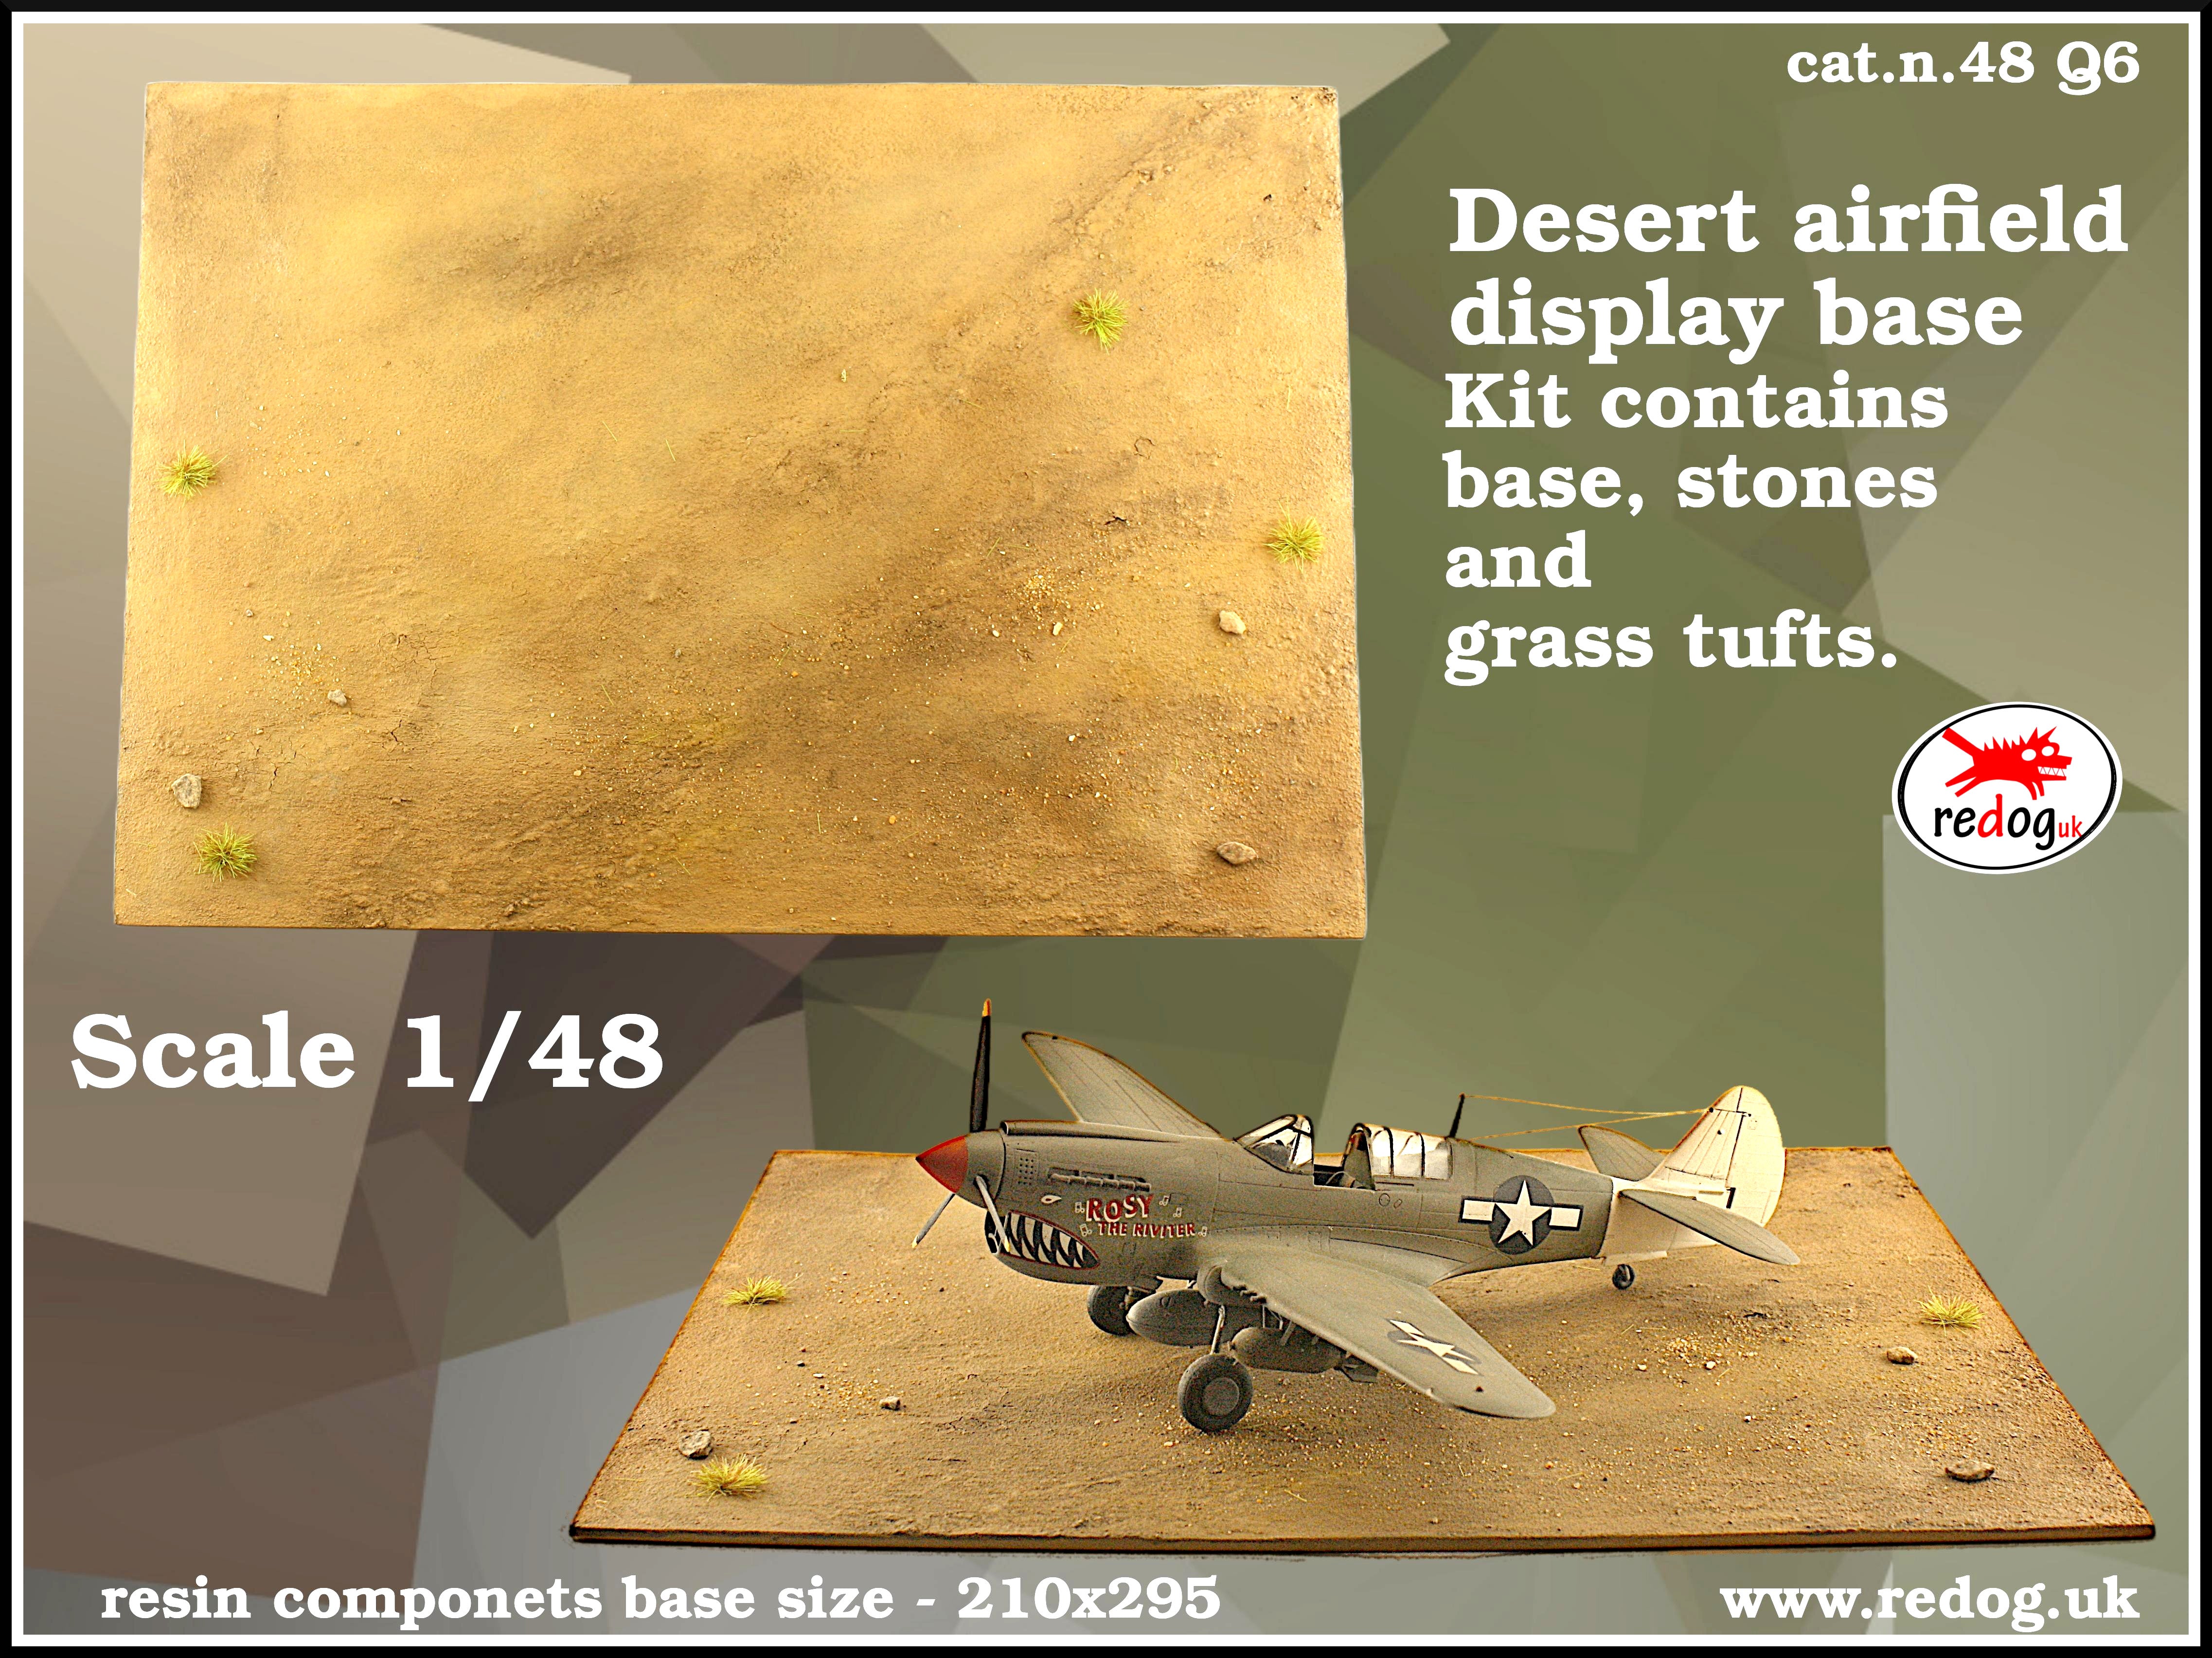 Redog 1/48 Air plane model kit display base - desert filed